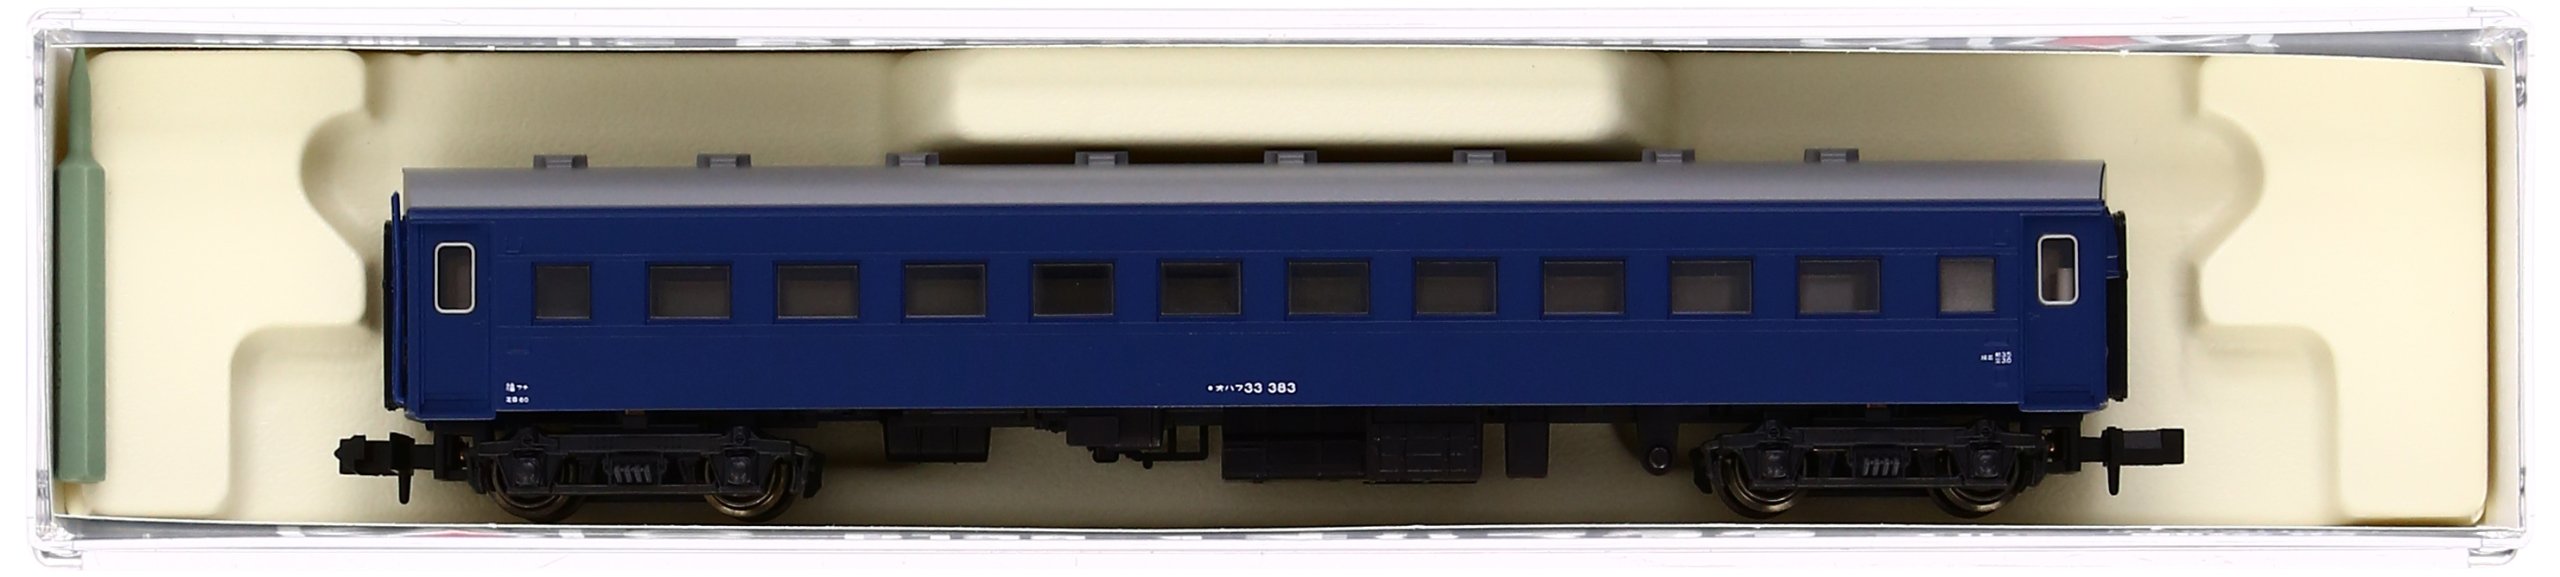 Kato N Gauge Blue Postwar 5128-4 Passenger Car - Railway Model Ohafu 33